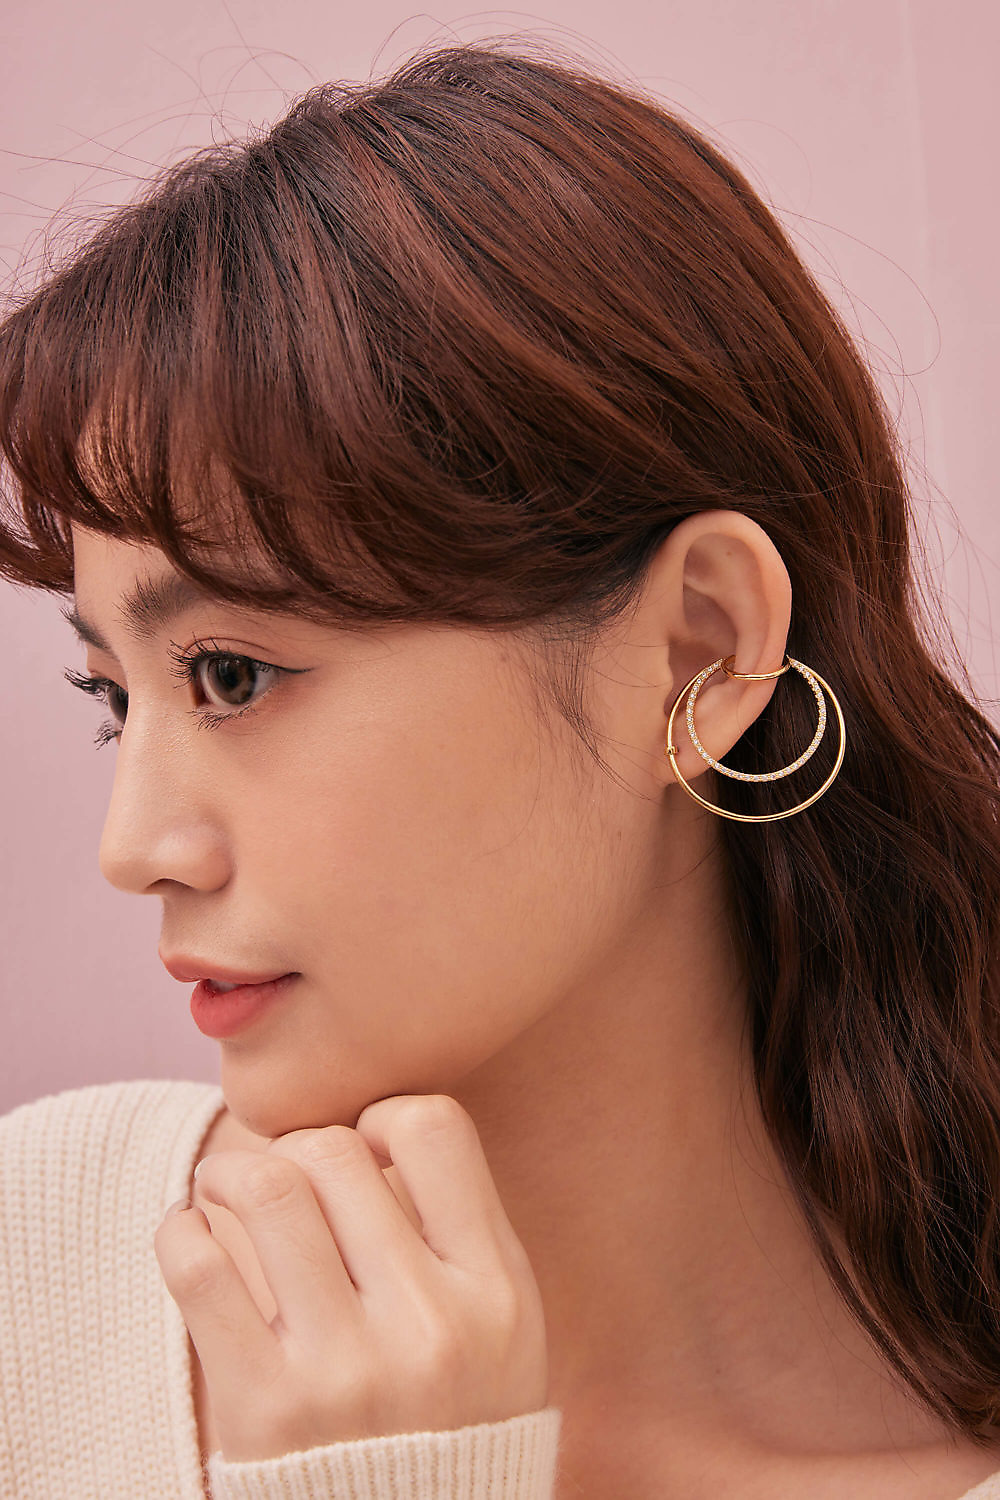 Eco安珂,韓國飾品,韓國耳環,耳針式耳環,耳骨耳環,大圈耳環,大耳環,貼耳耳環,鑲鑽耳環,不對稱耳環